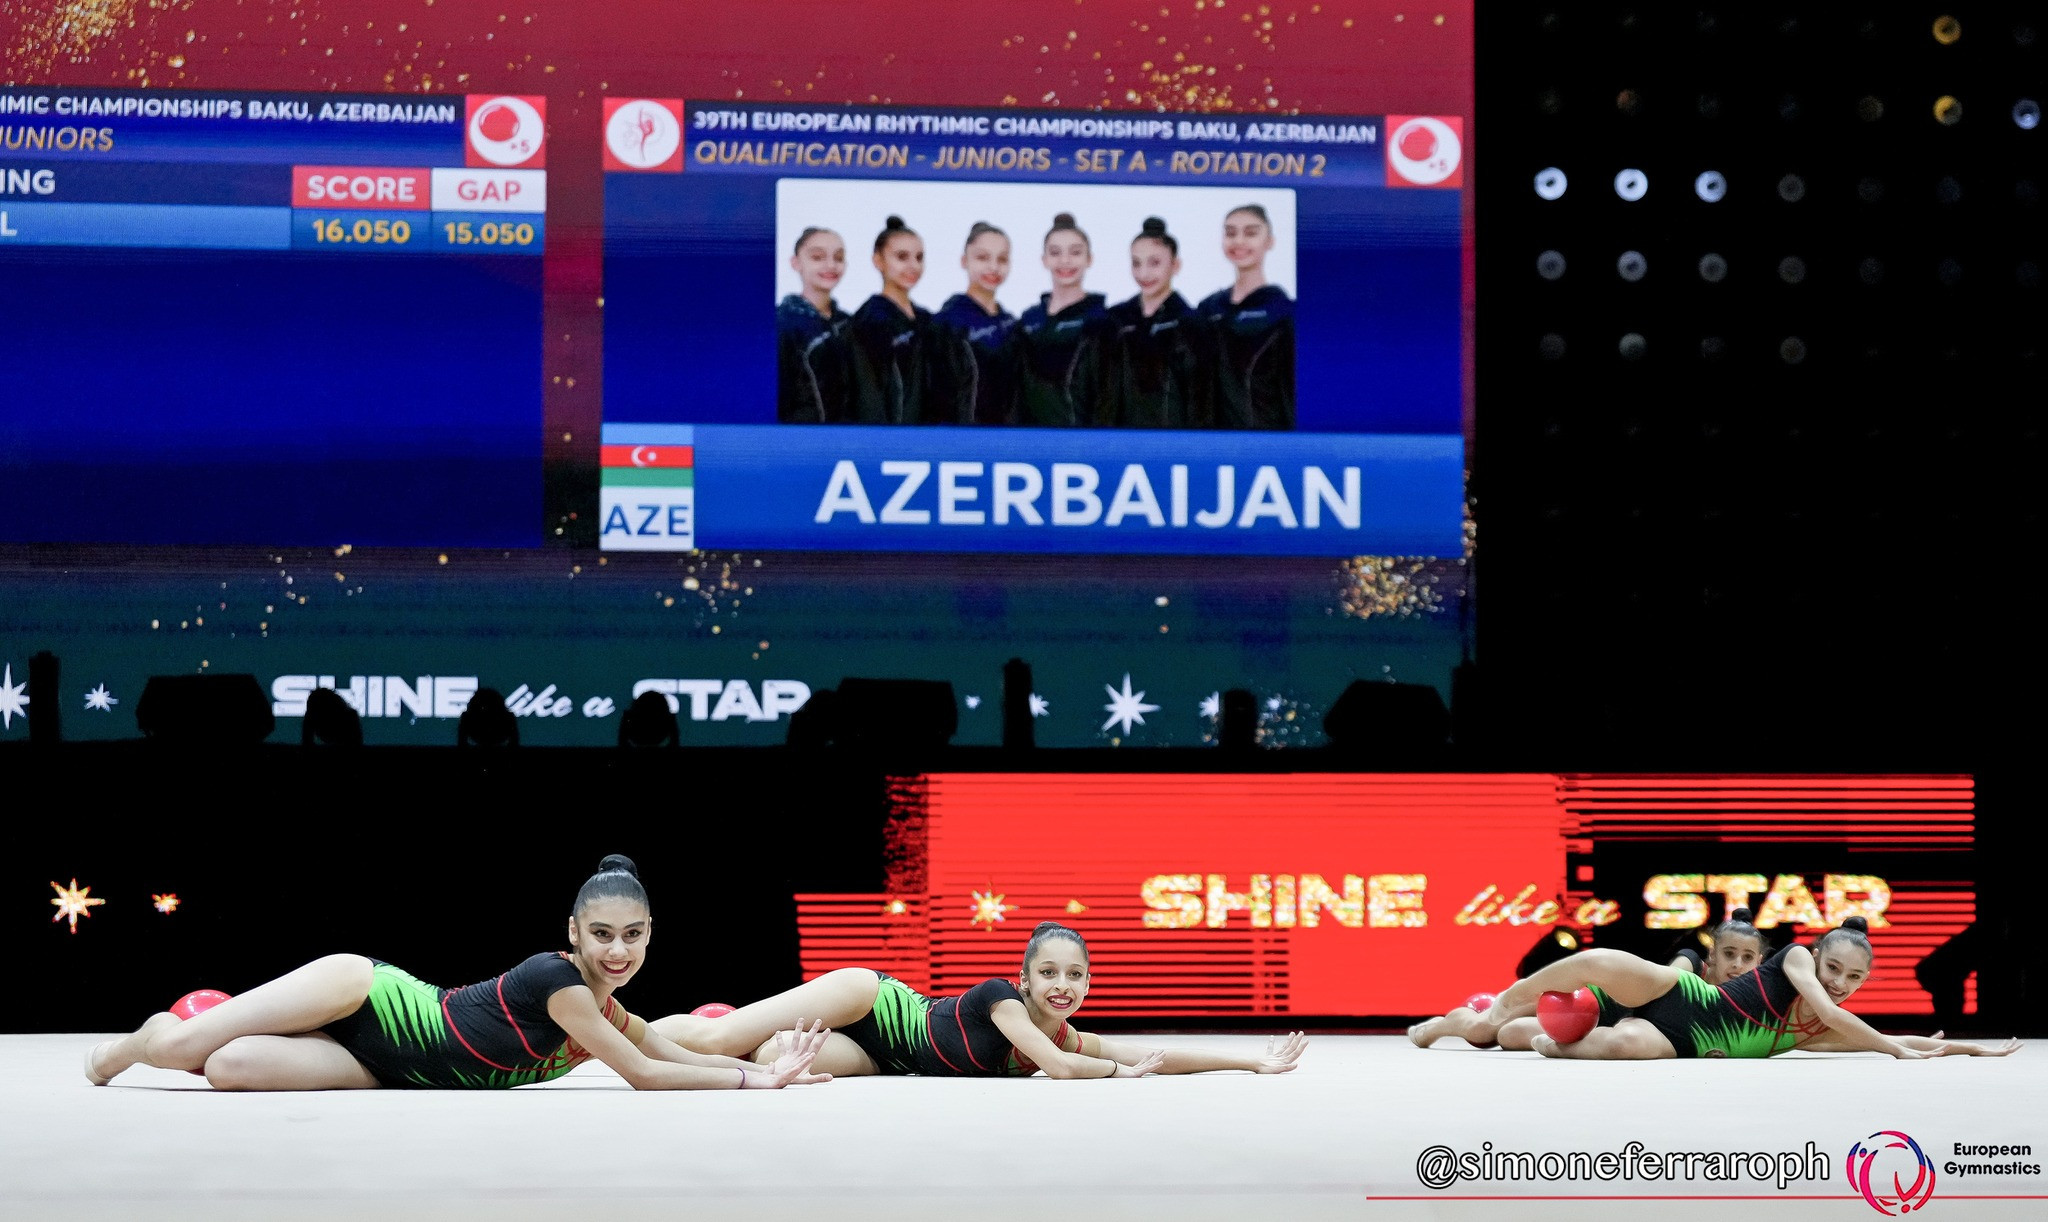 Hosts Azerbaijan got bronze in the all round event today ©European Gymnastics
